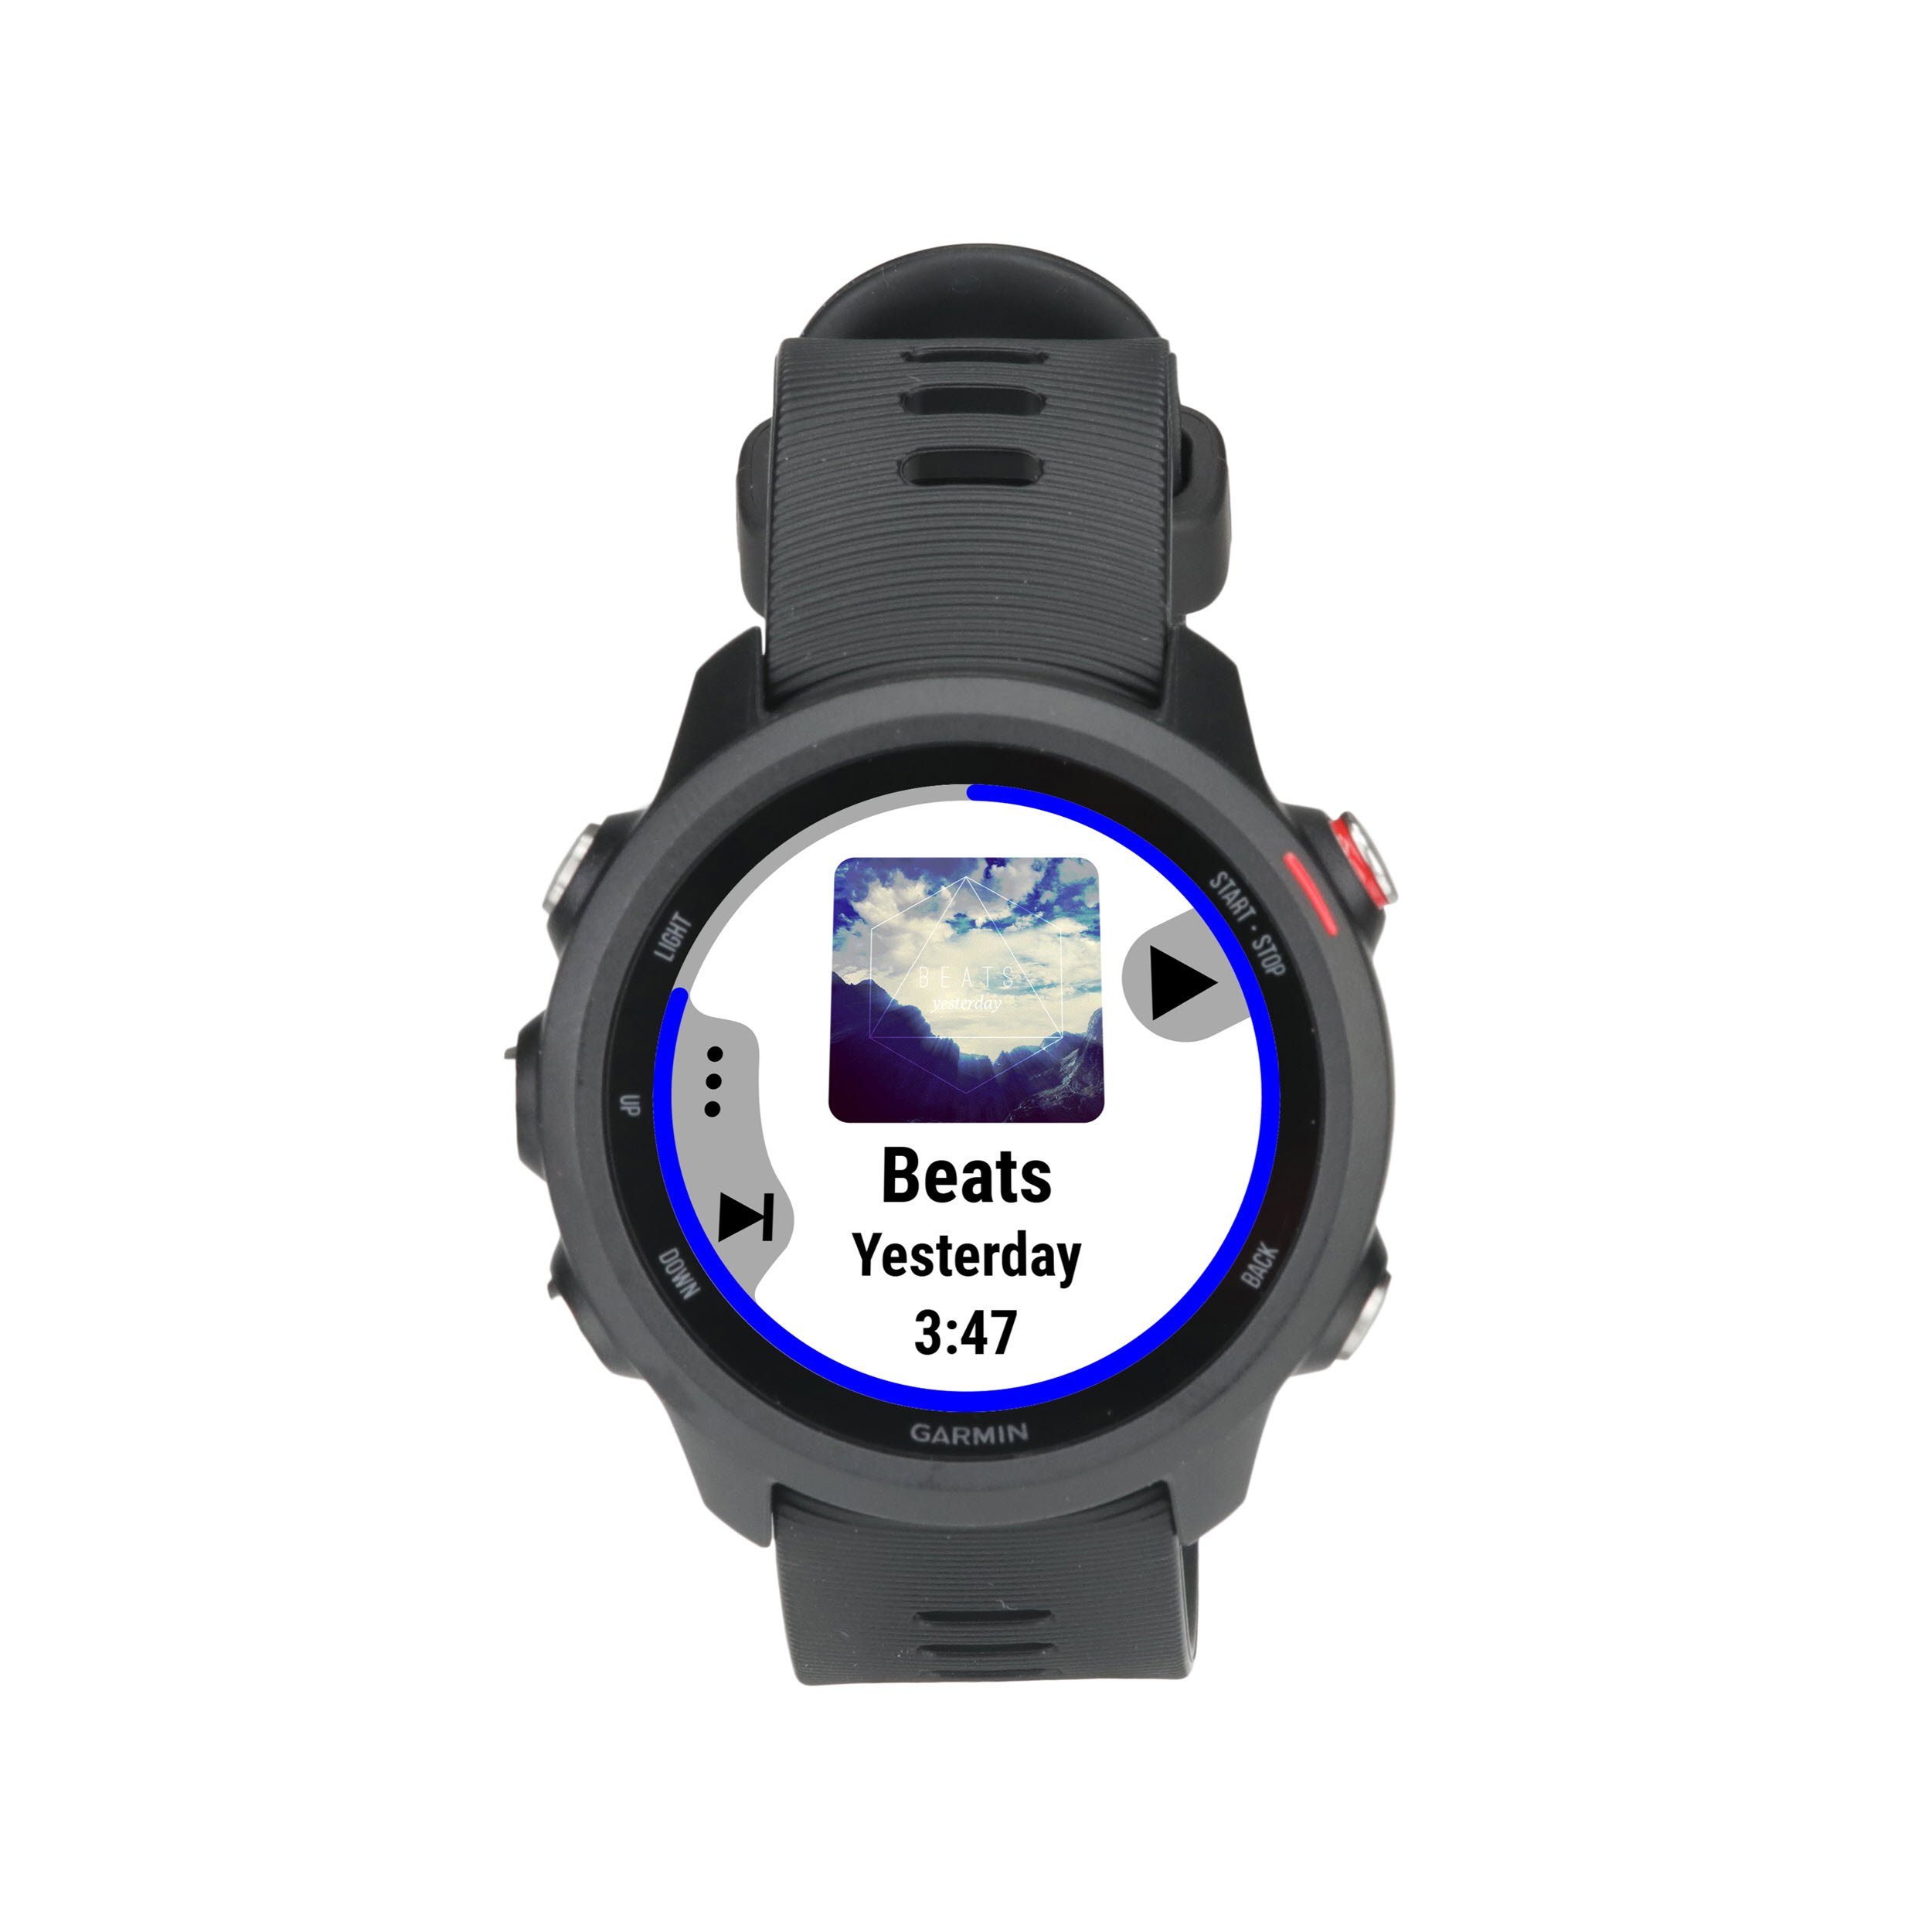 Forerunner® 245 GPS Running Smartwatch with Music in Black 